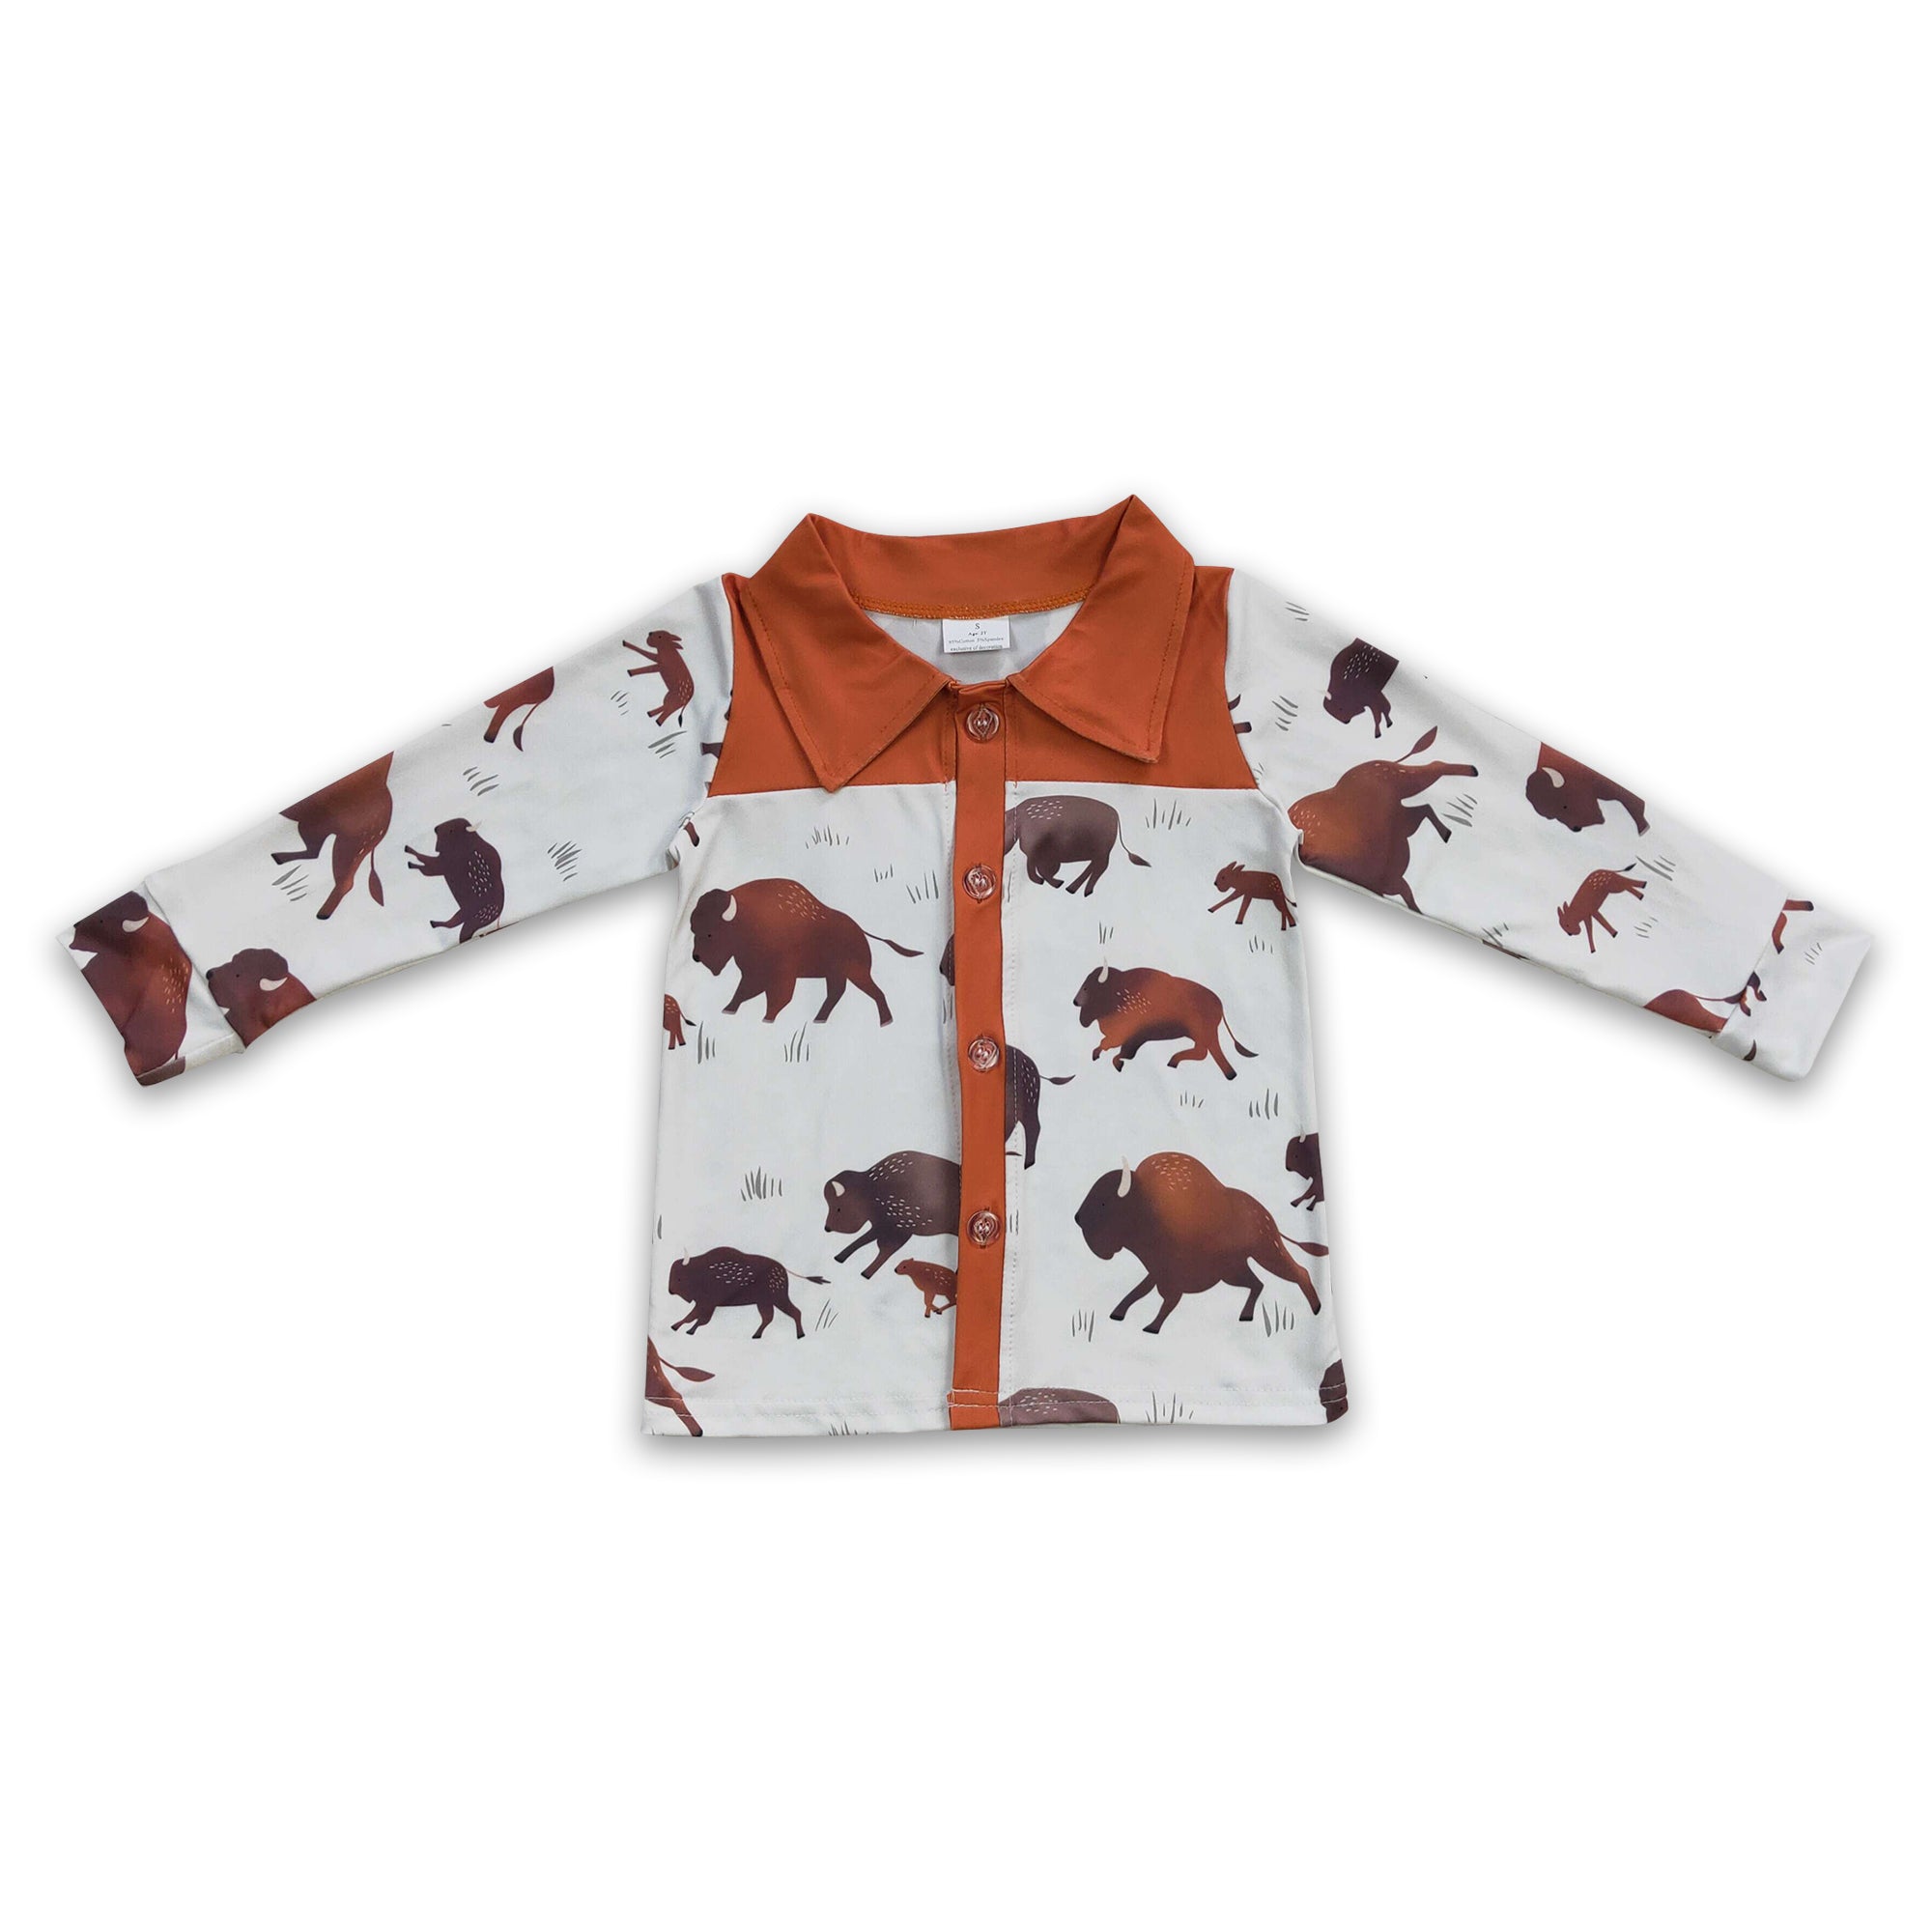 BT0200 toddler boy clothes cow print winer shirt button top